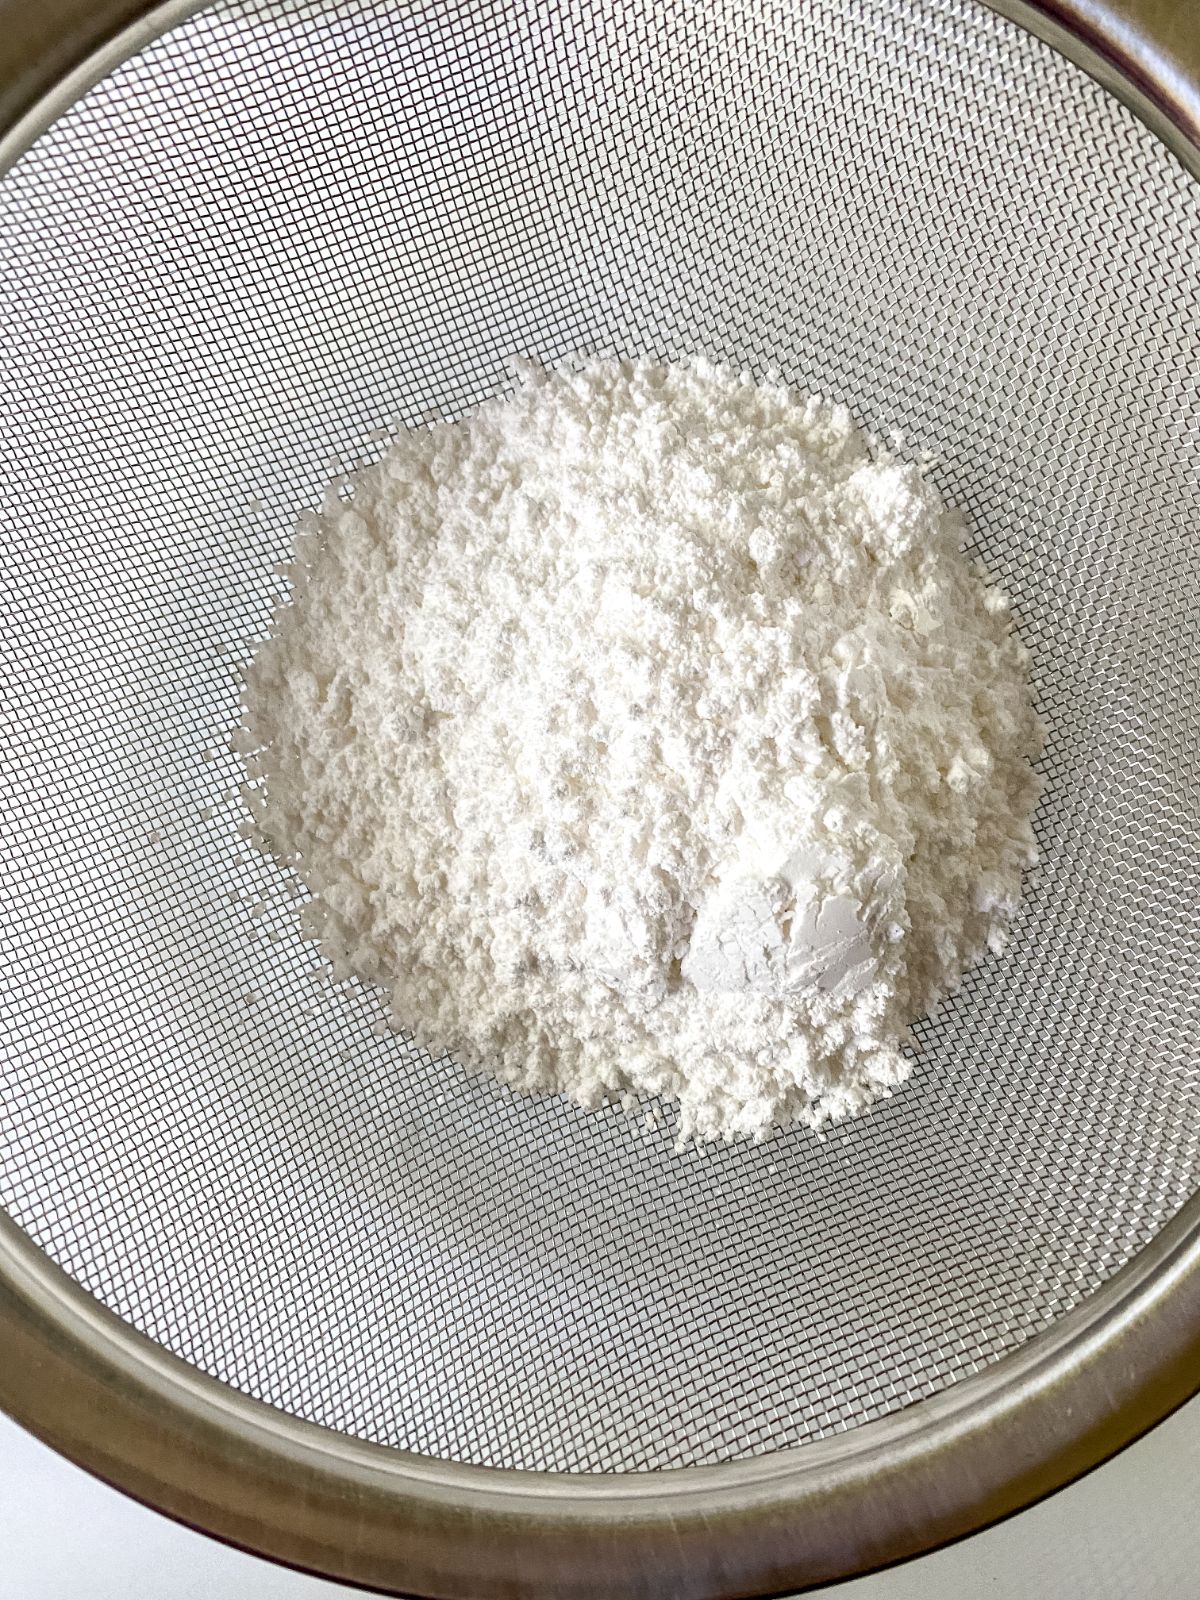 glass bowl of powdered sugar